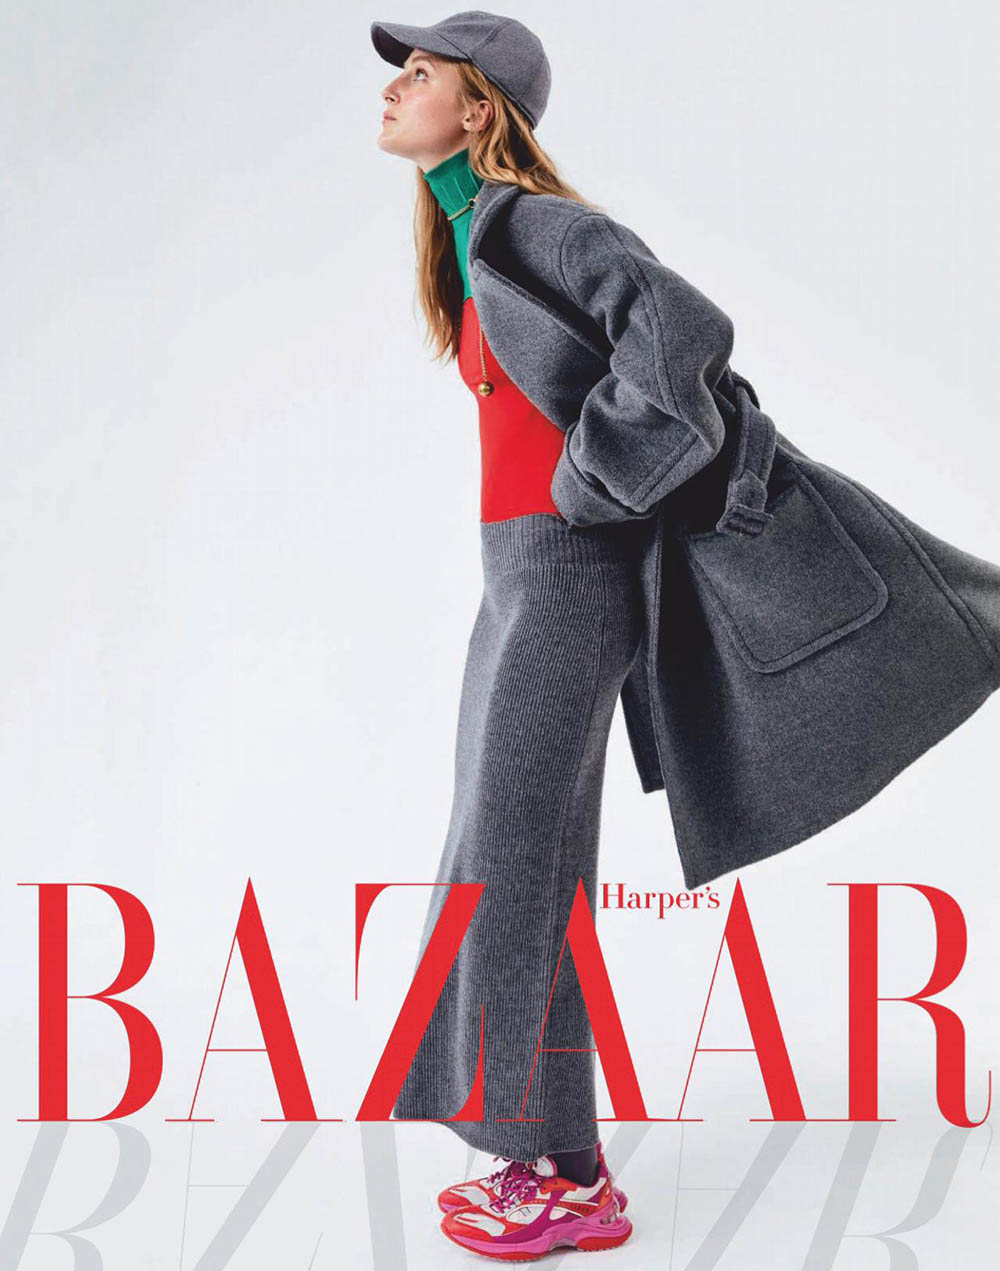 Olympia Campbell by Agata Pospieszynska for Harper’s Bazaar Spain September 2019